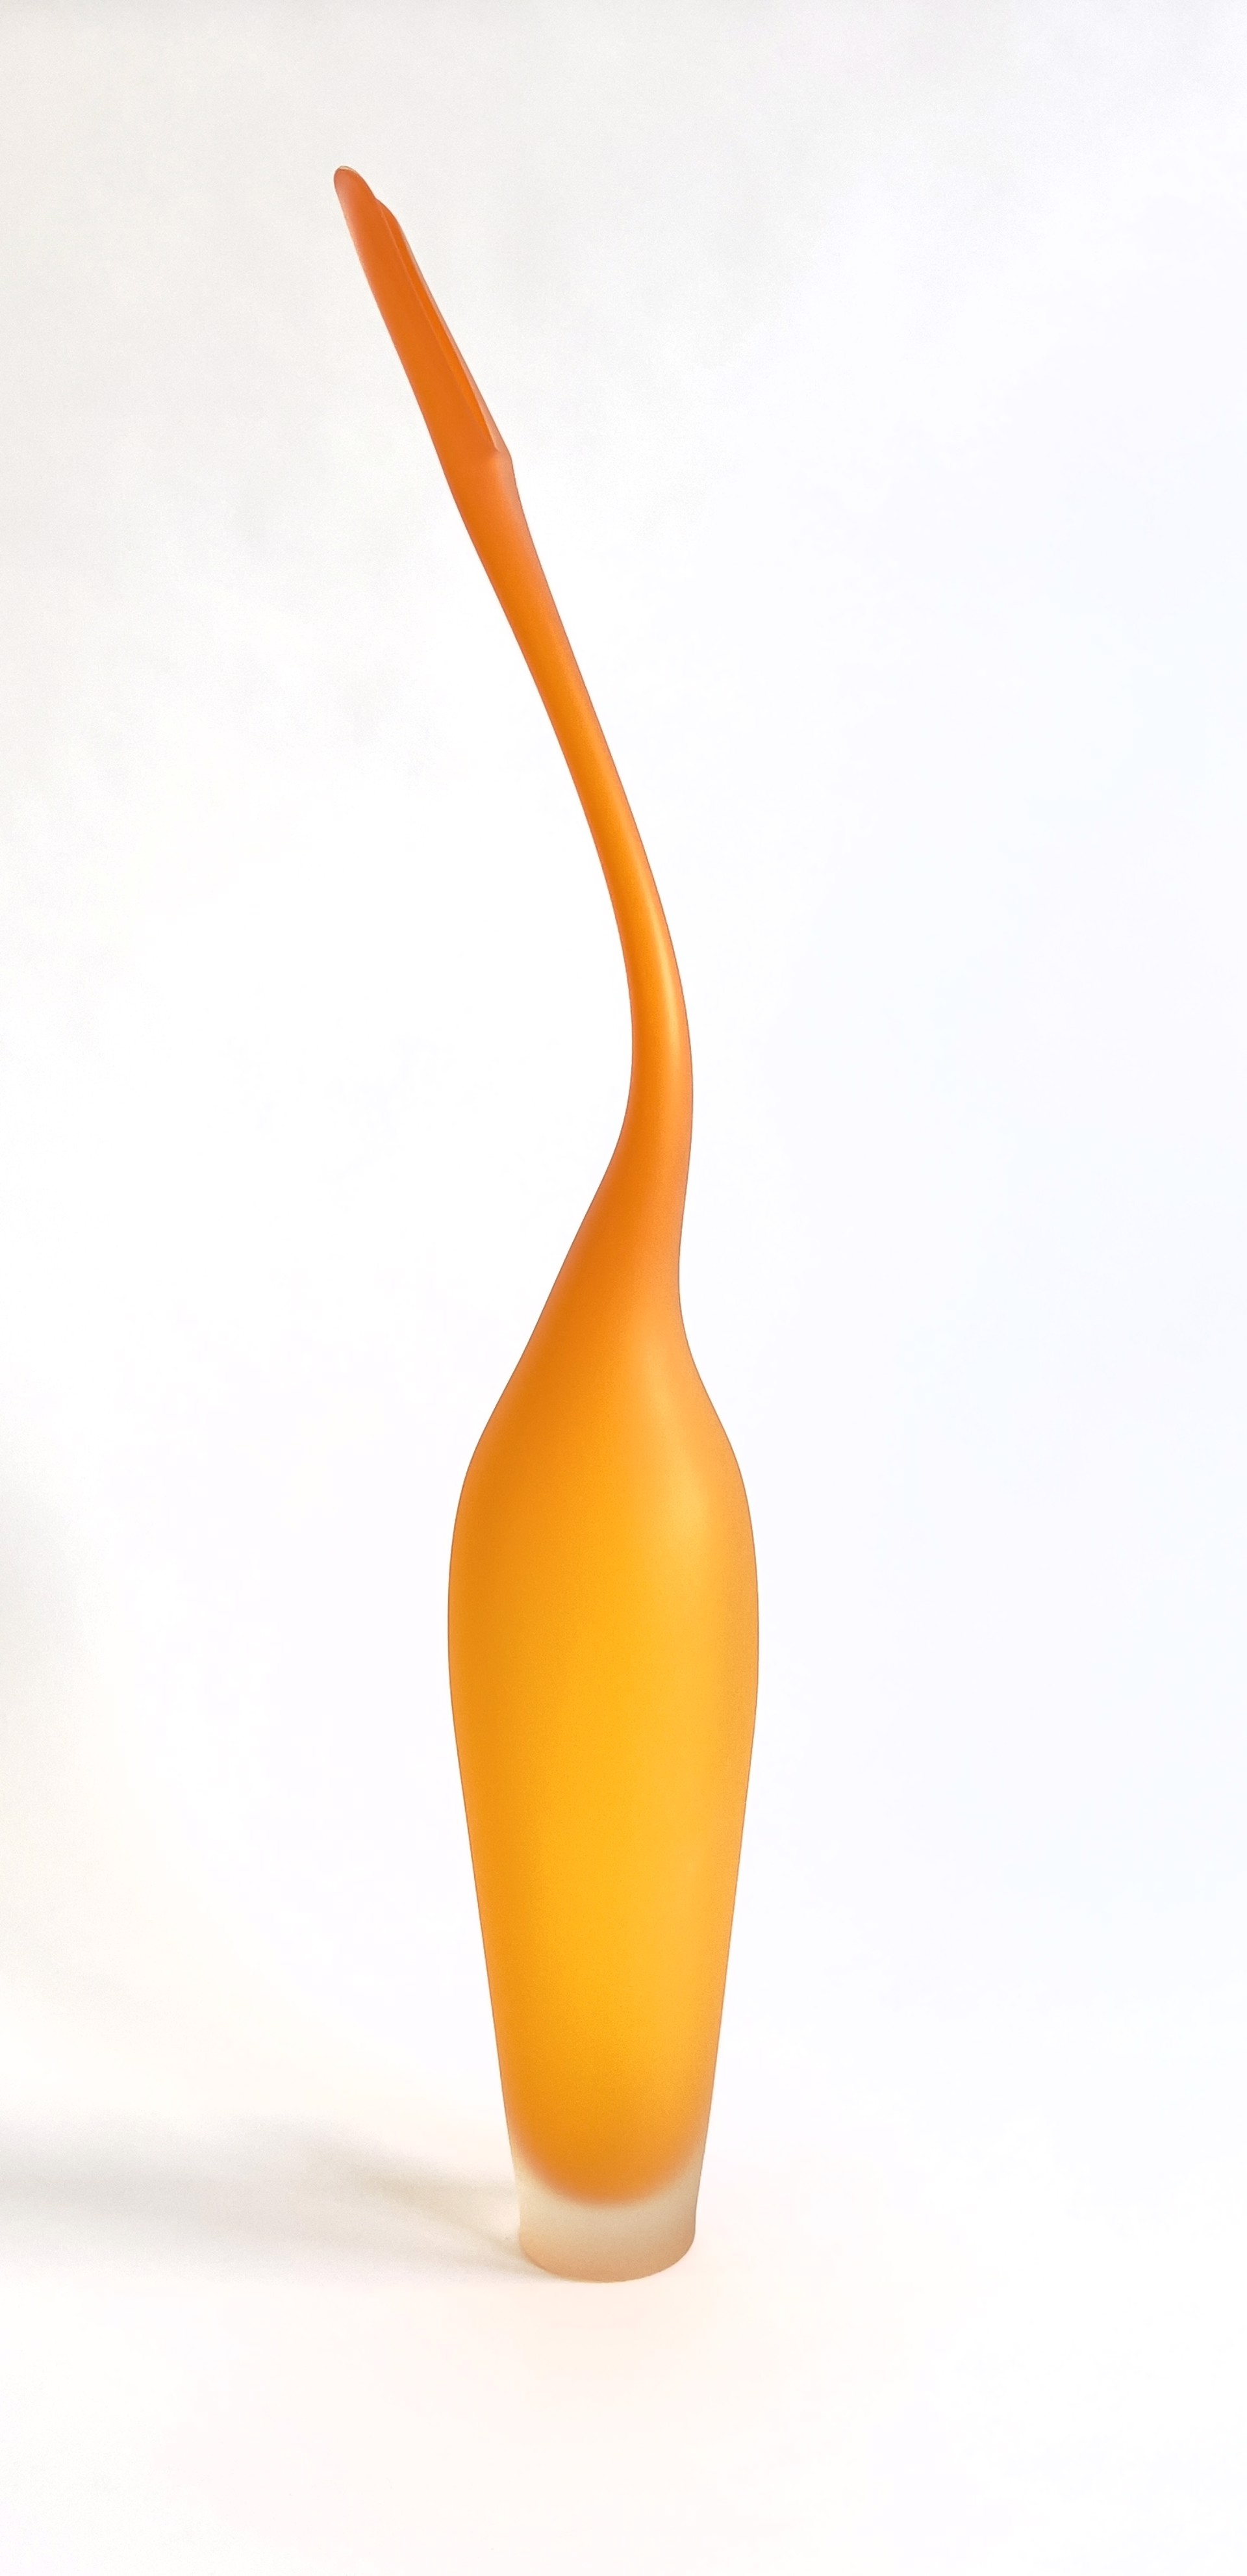 Saffron Lima by The Goodman Studio